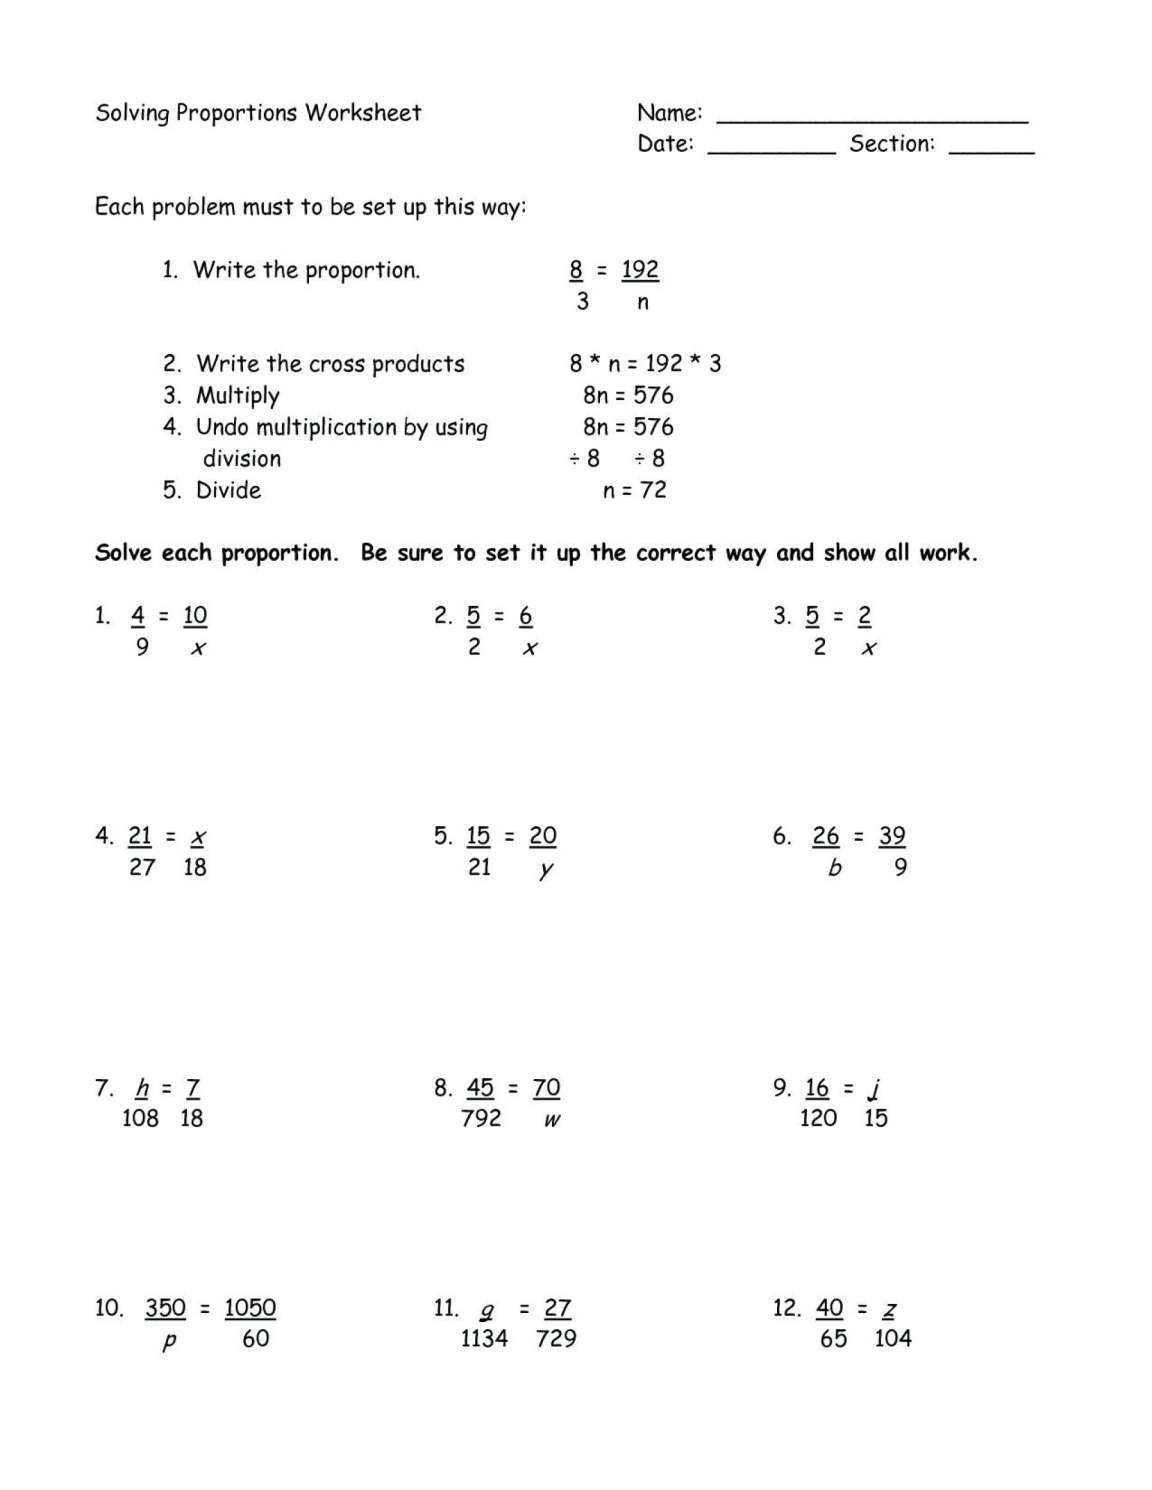 algebra-2-worksheets-complex-numbers-worksheets-complex-numbers-simplifying-rational